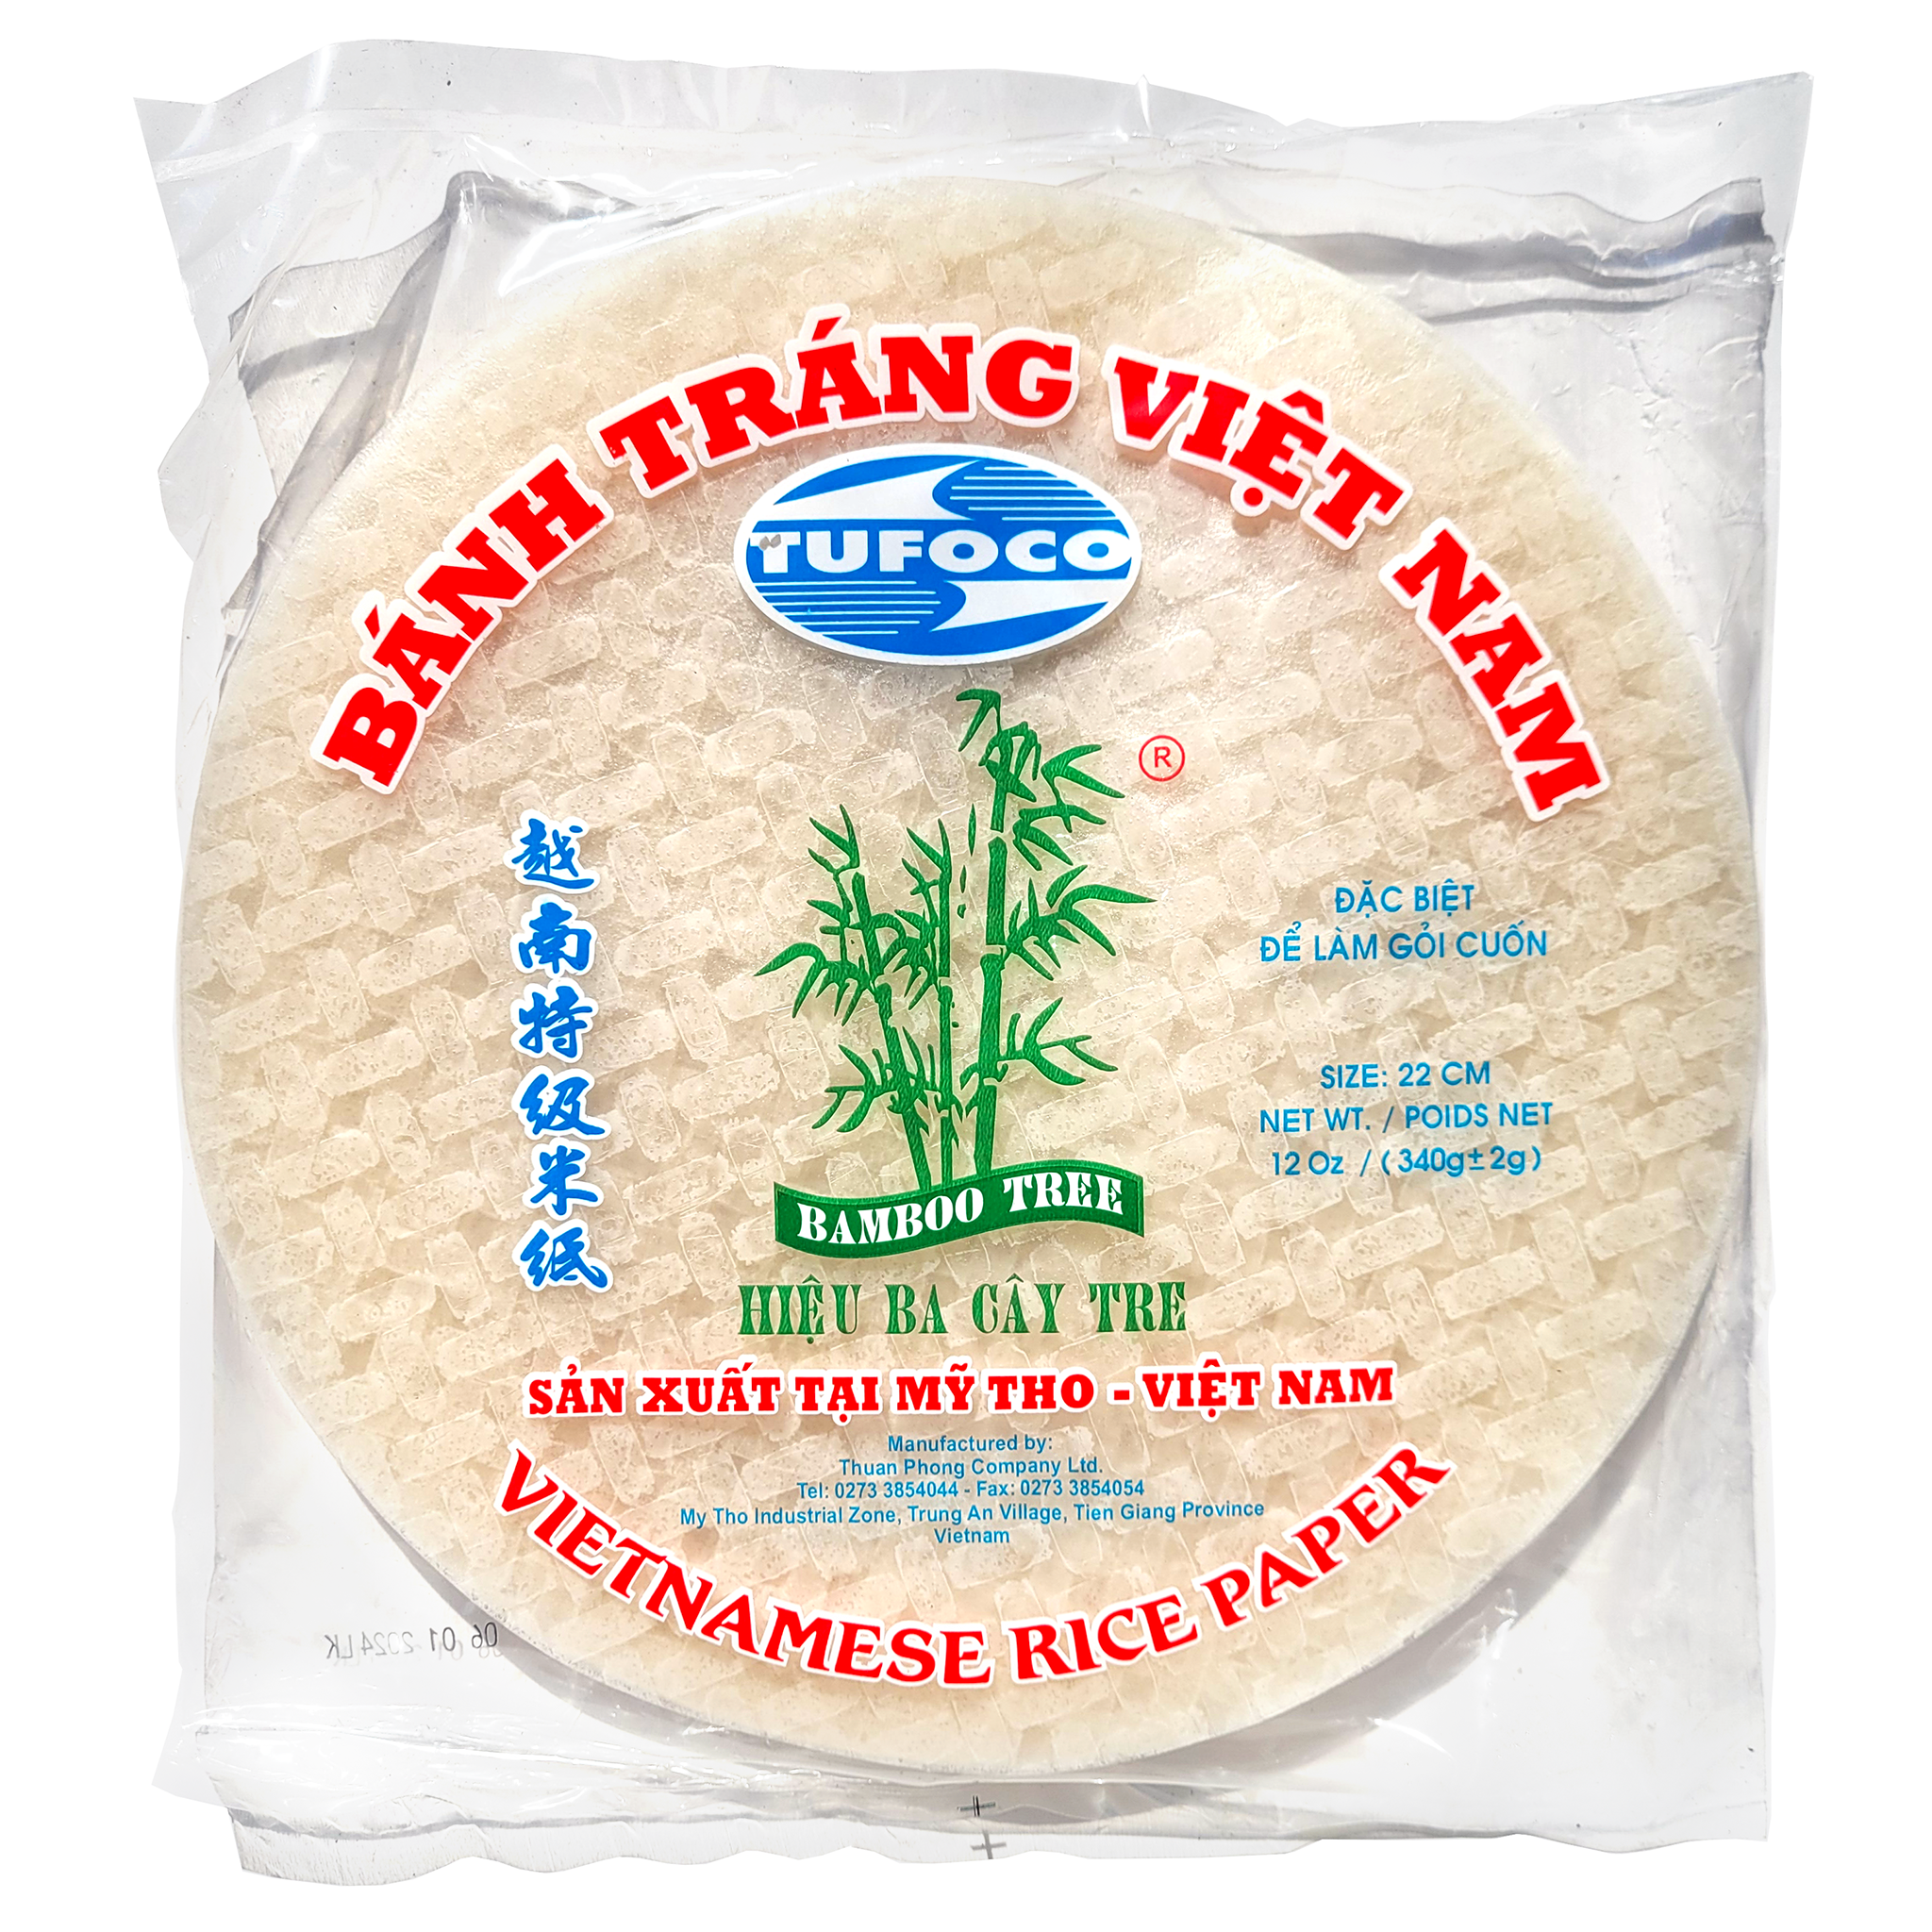 Tufoco Vietnamese Rice Paper (Banh Trang) - 12 oz